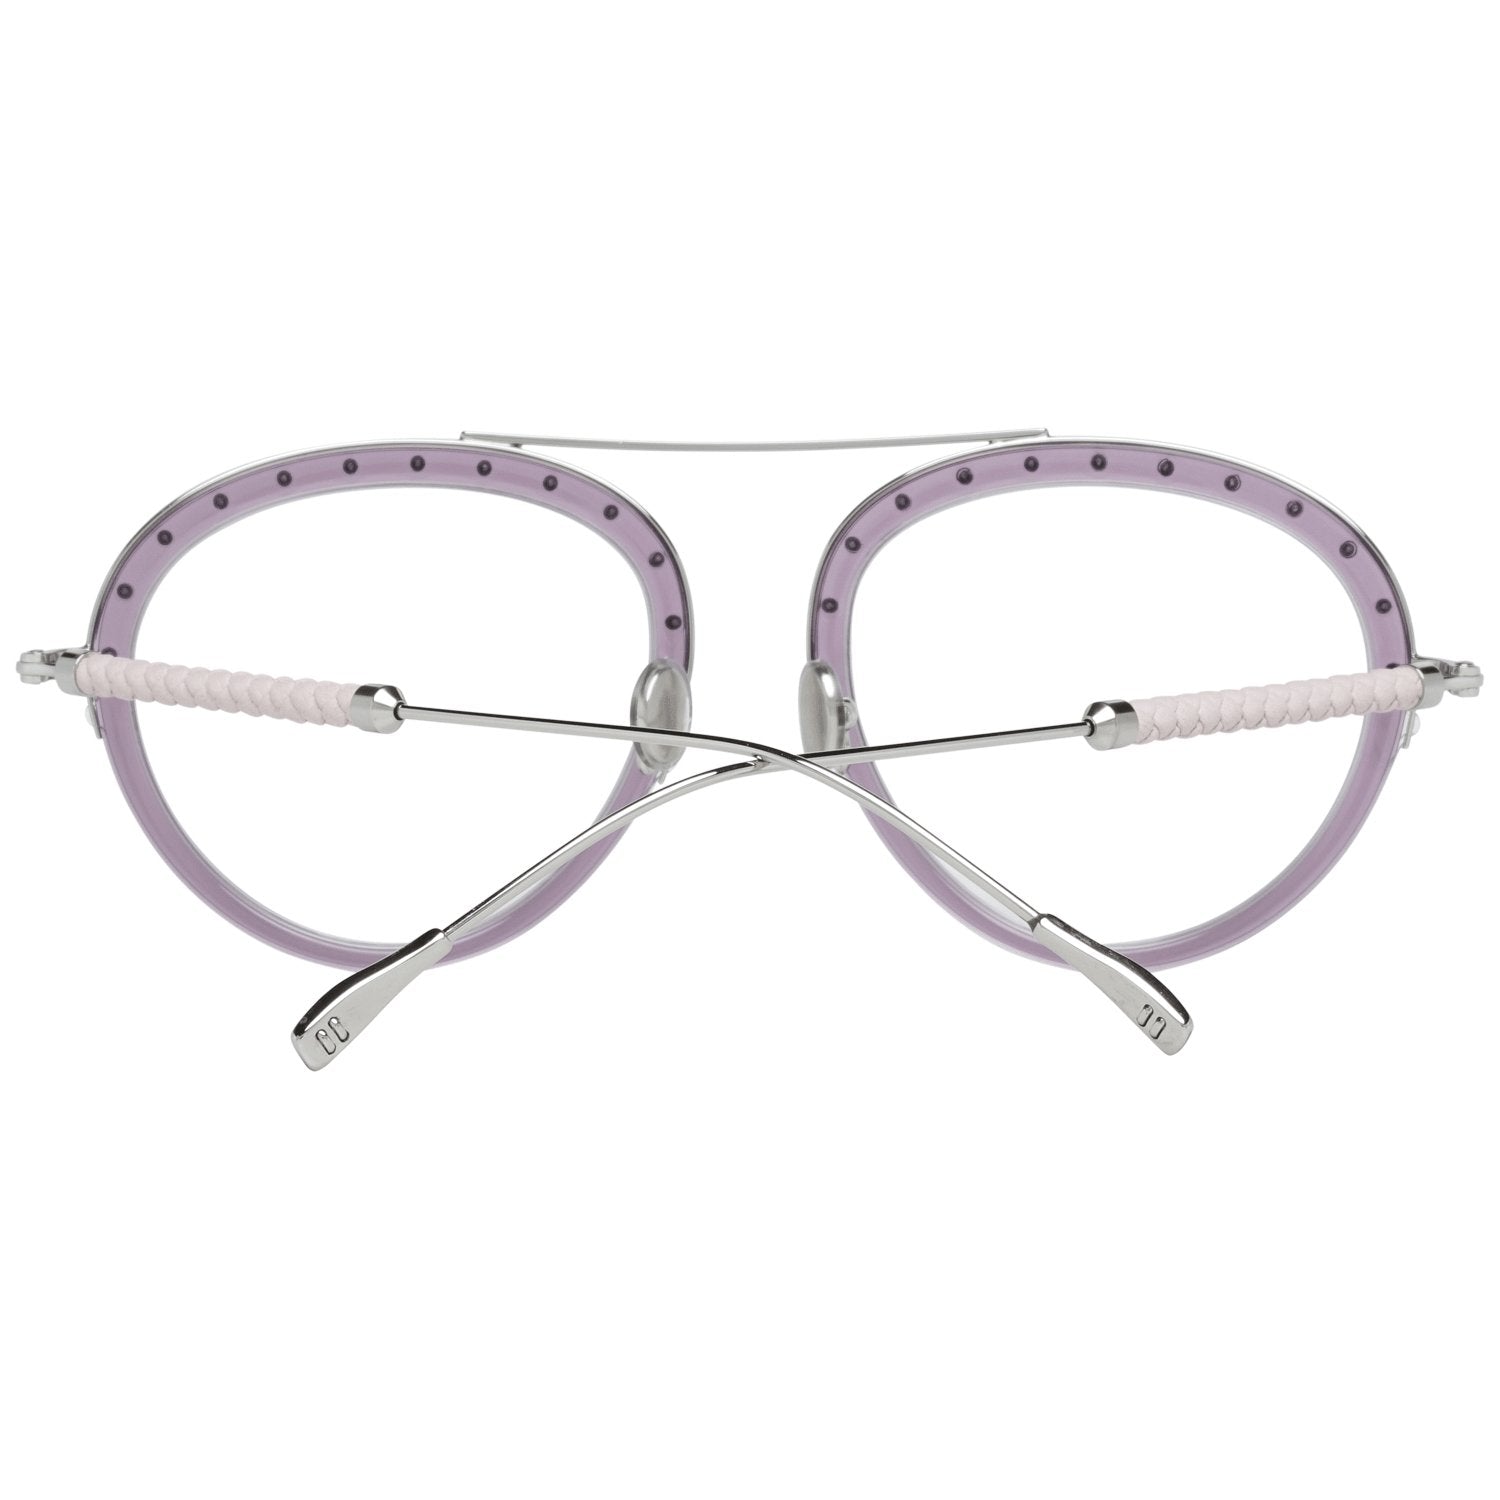 Tod's Purple Frames for Woman - Fizigo